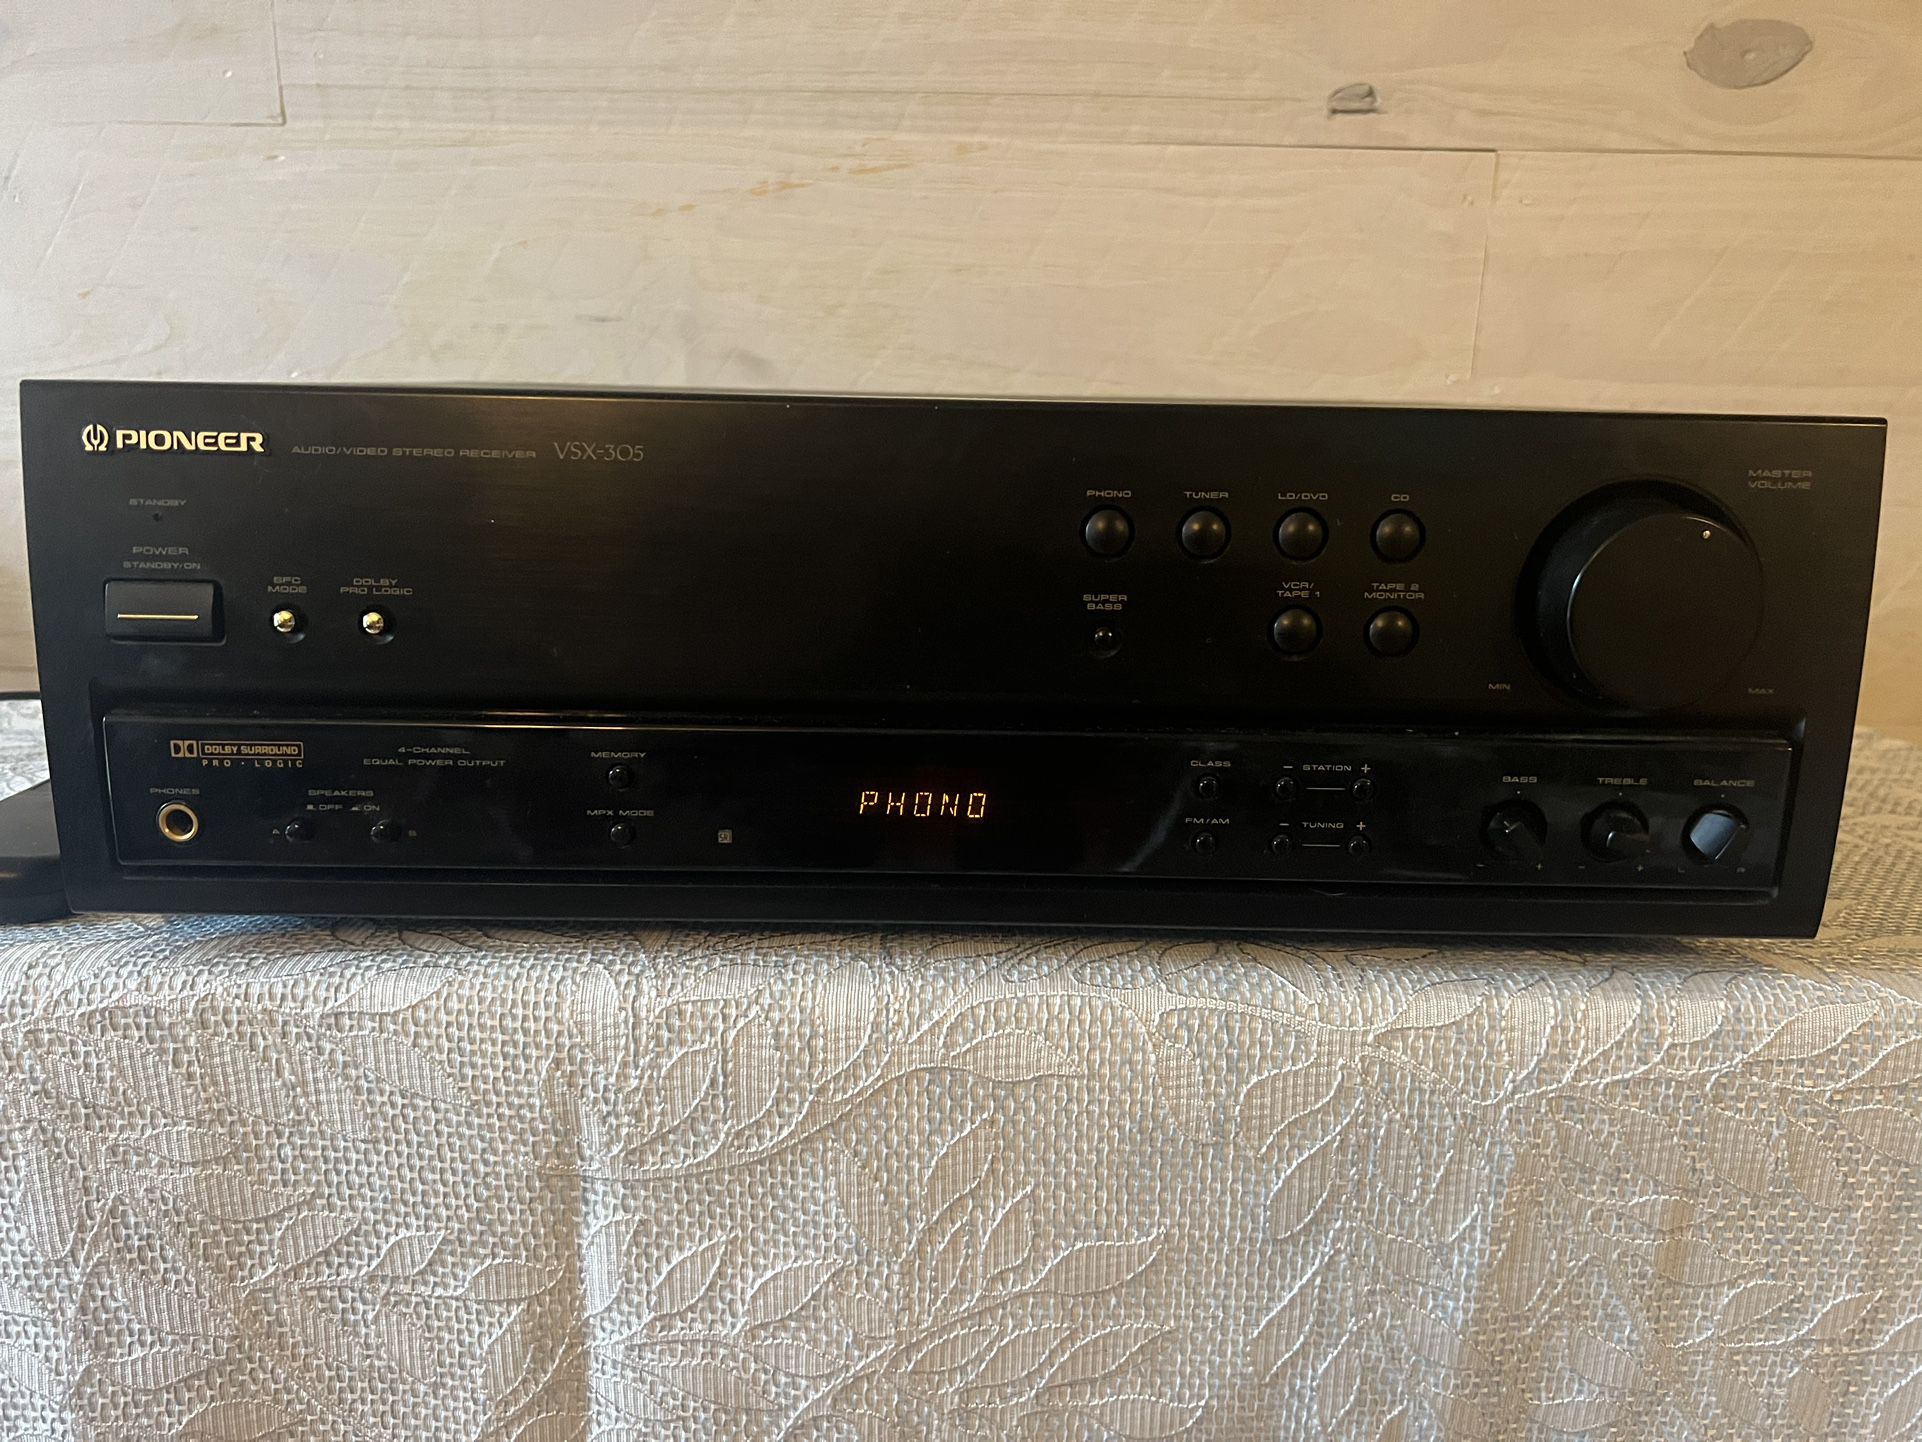 Pioneer VSX-305 A/V Stereo Receiver With Remote